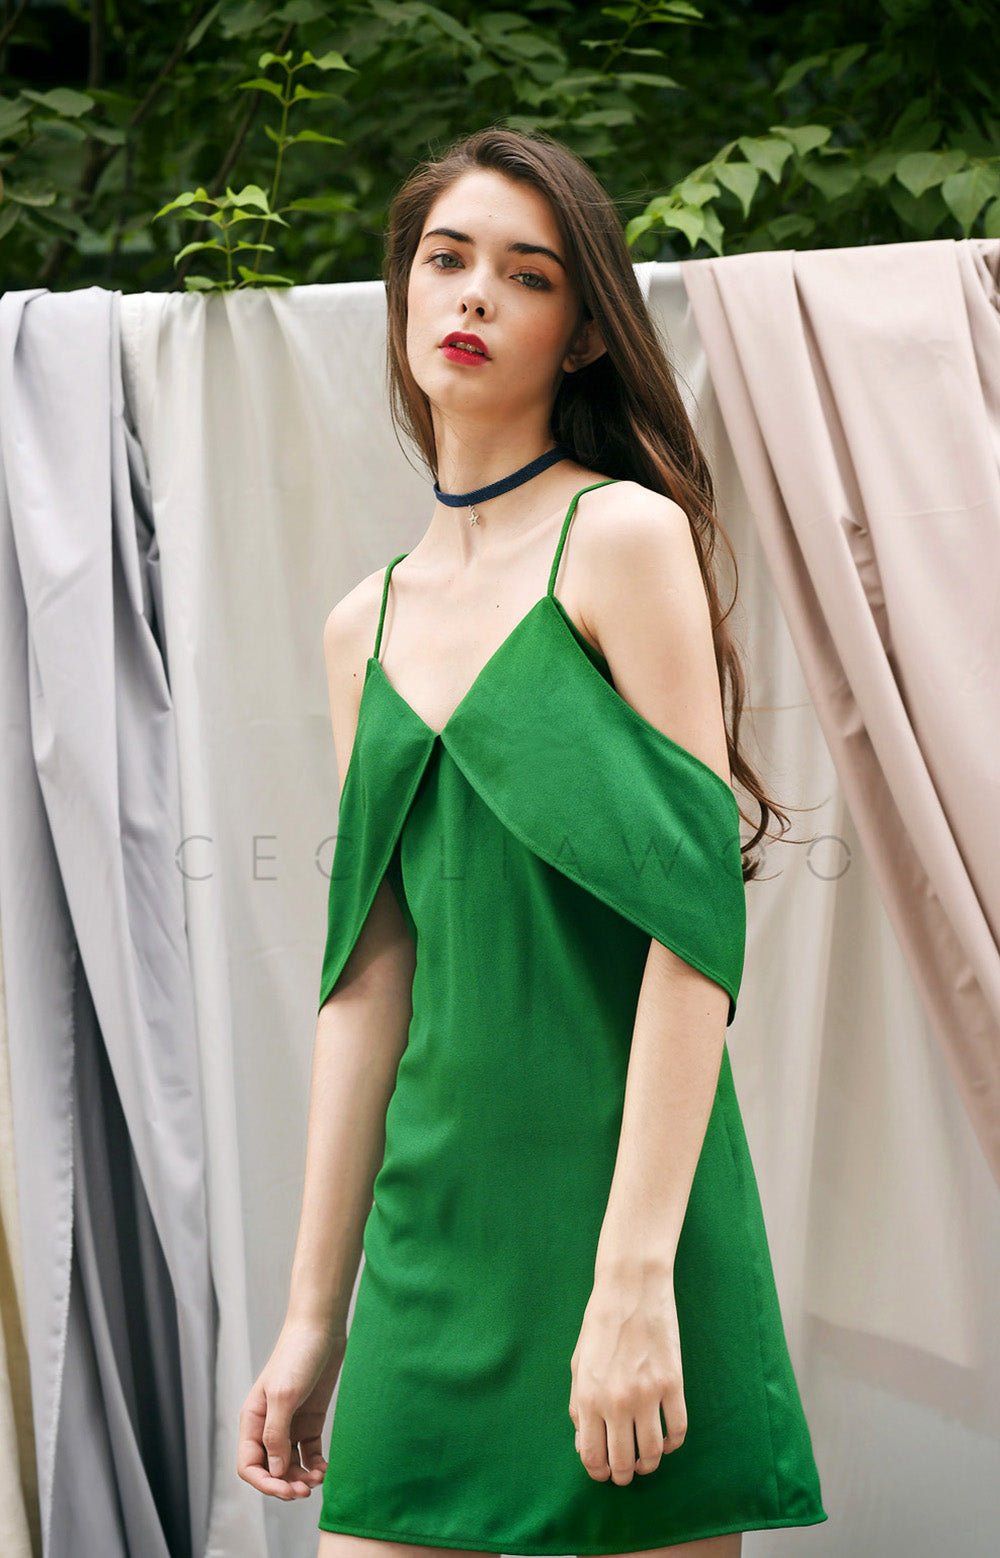 long sleeve green mini dress